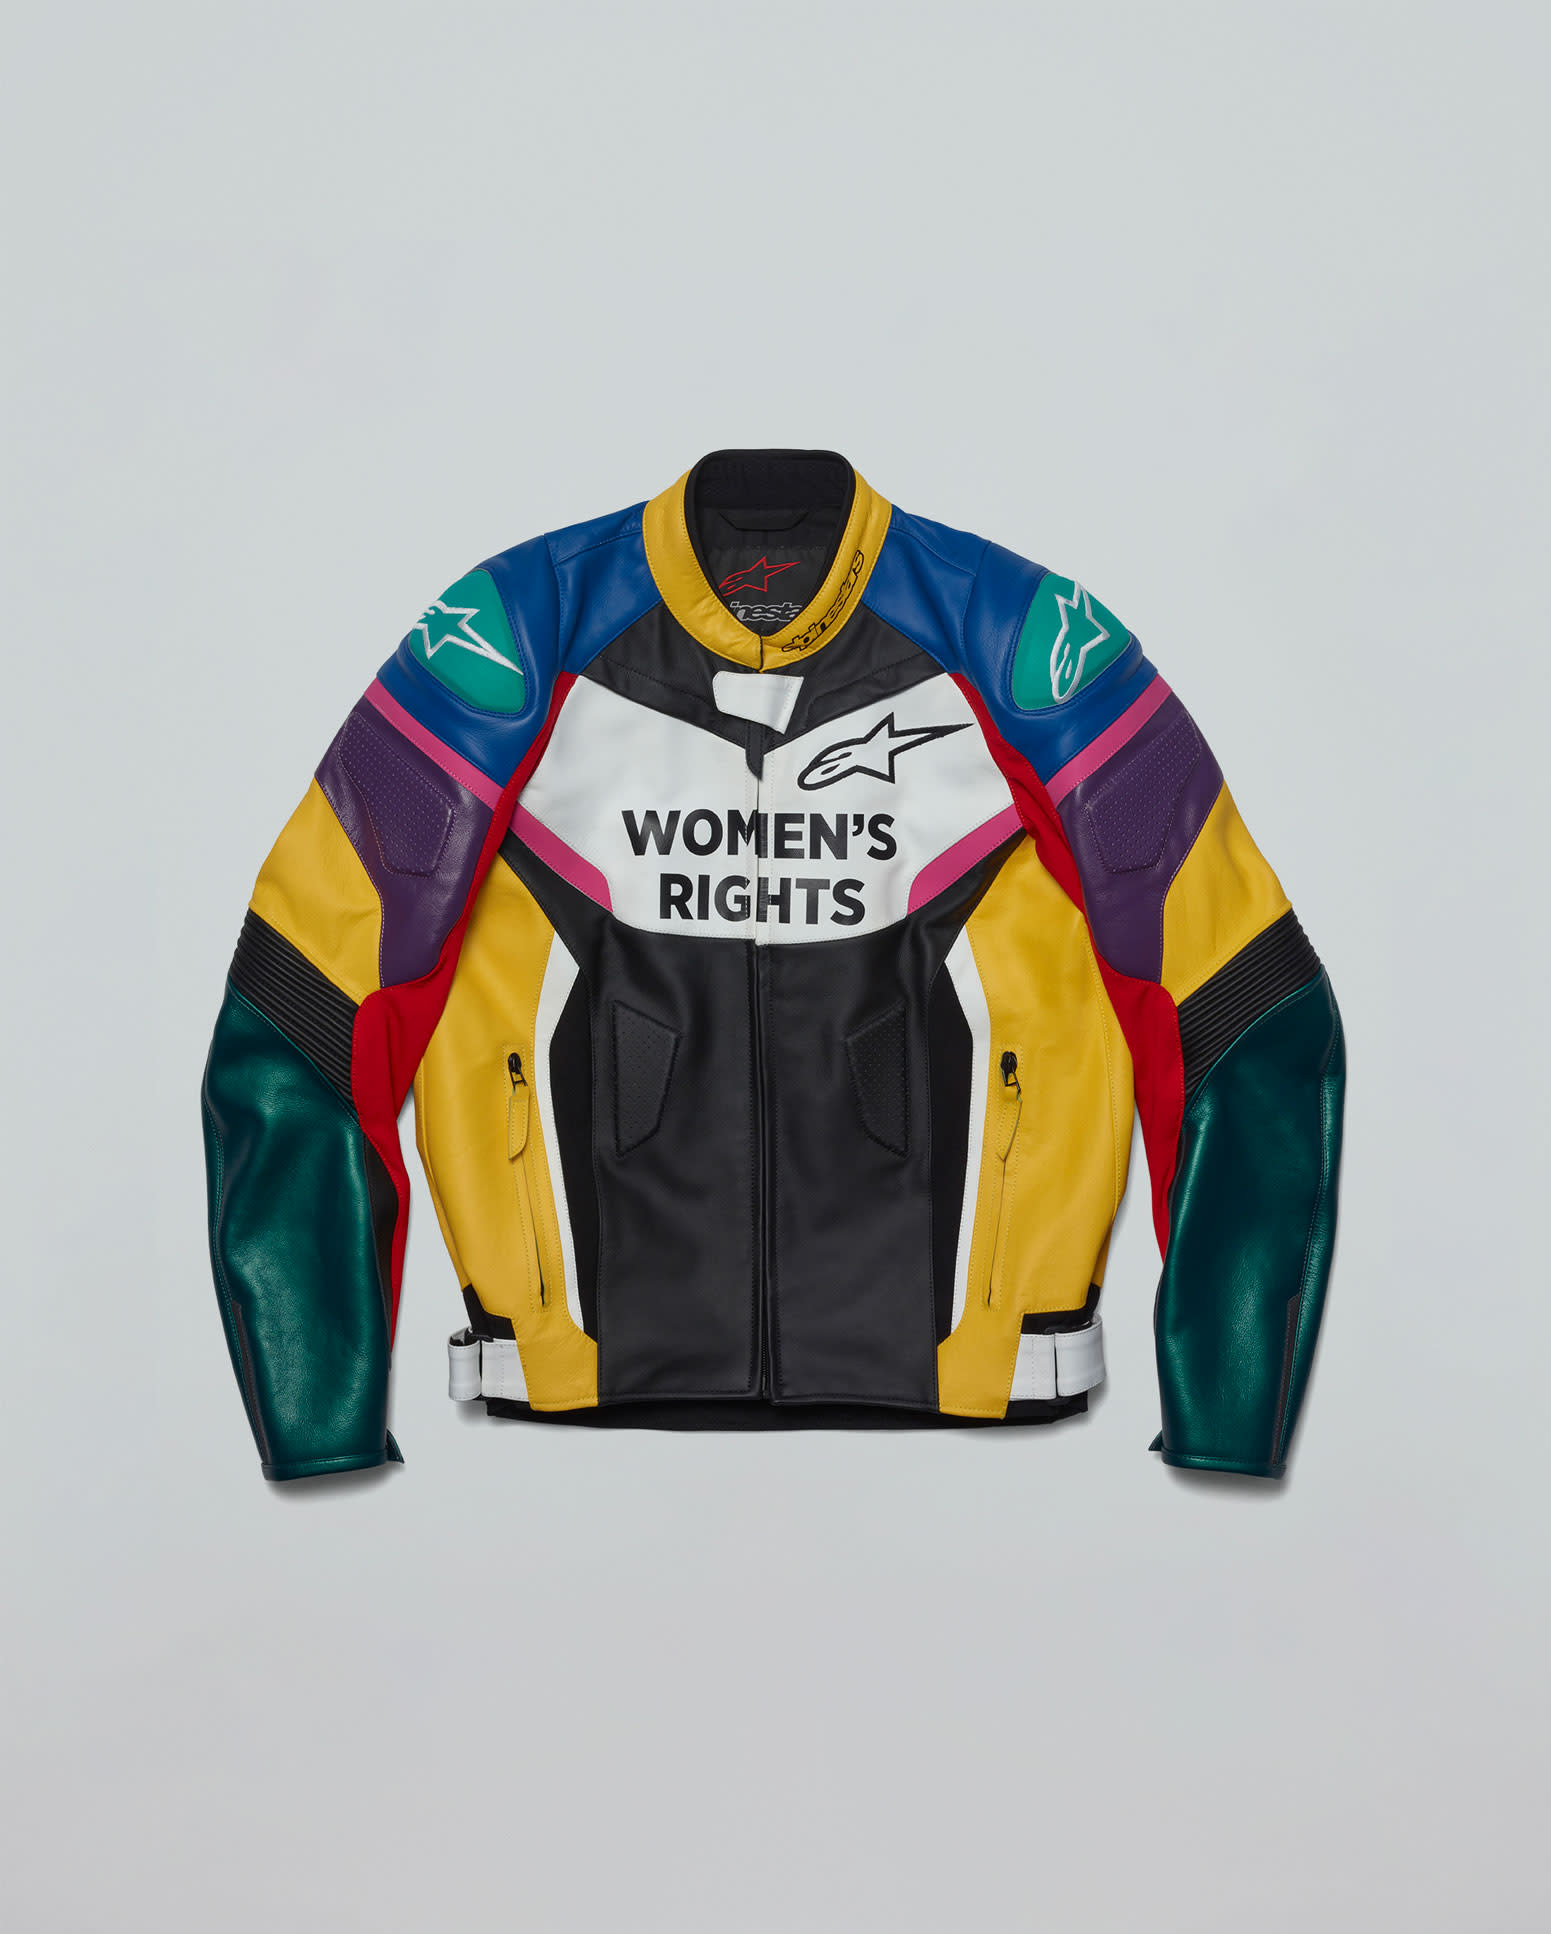 Alpinestar-Motorcycle-Jacket-Womens-Rights-1